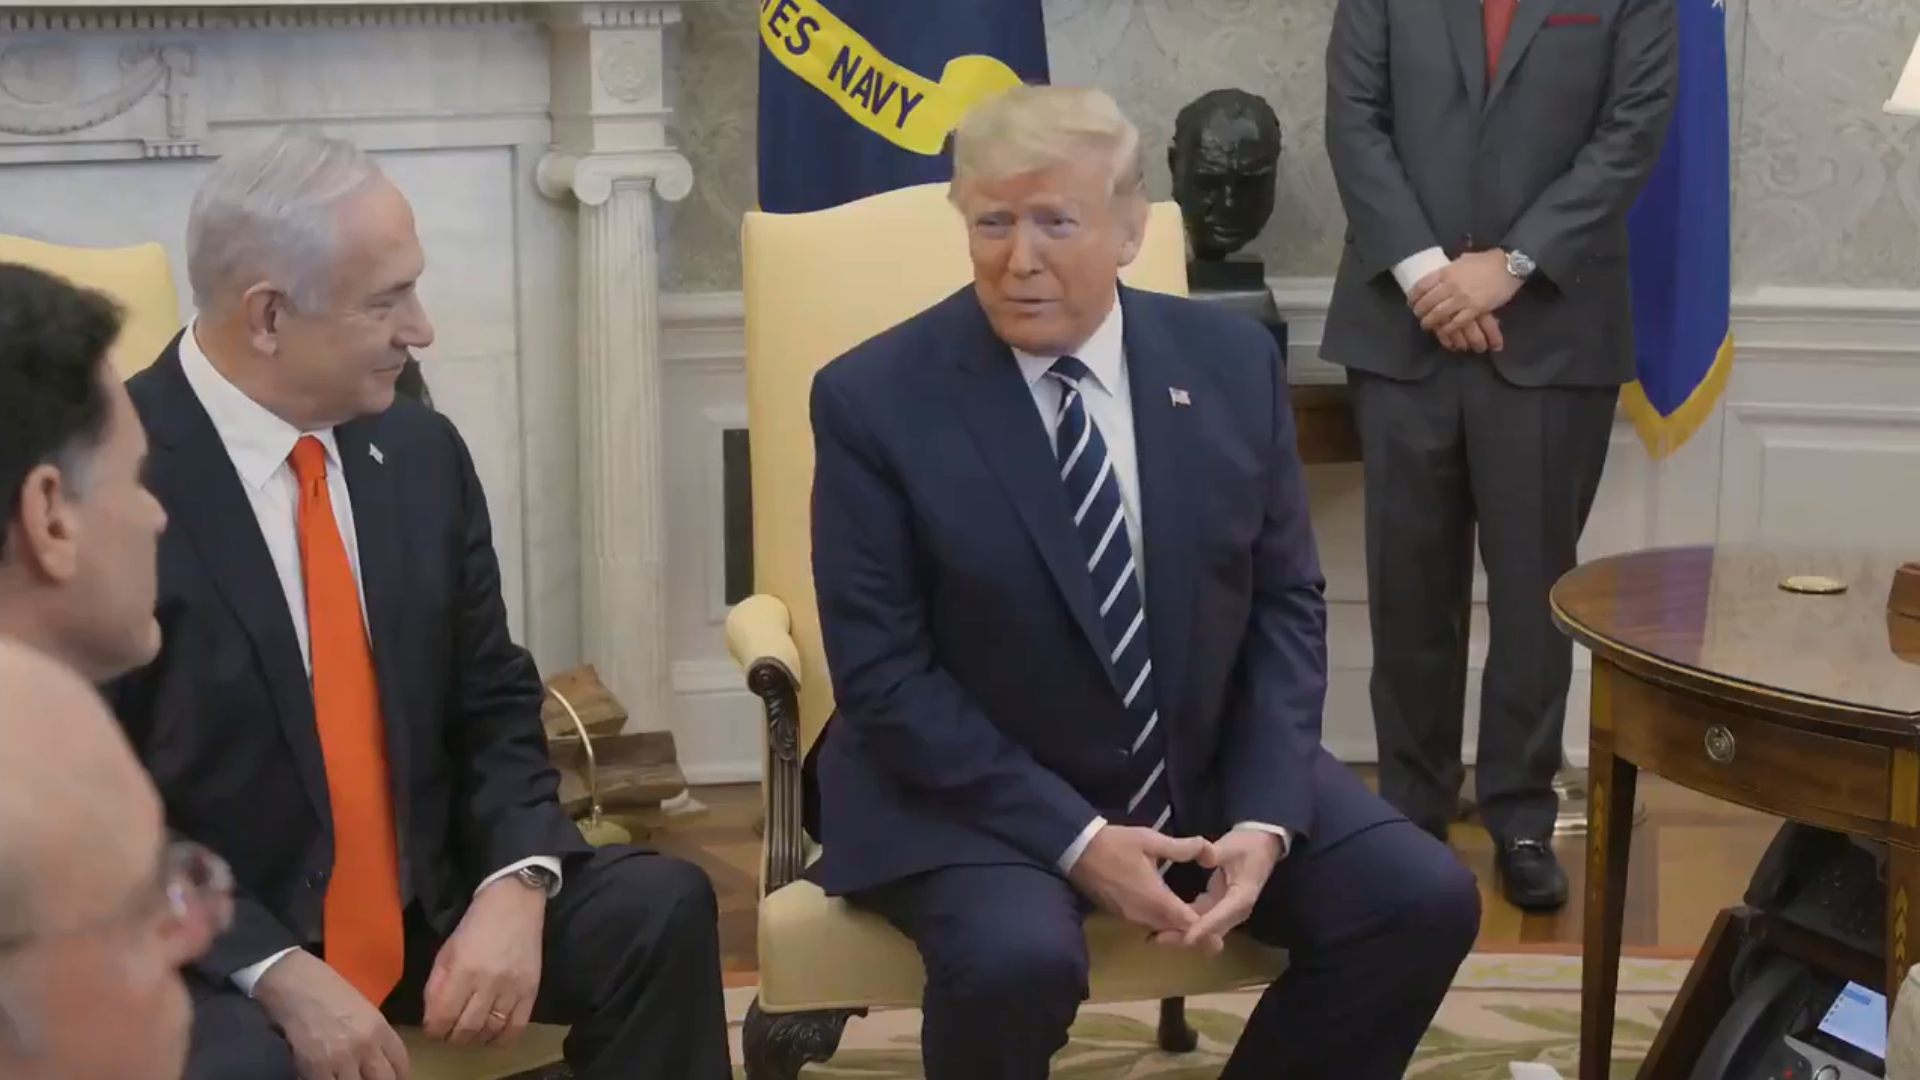 Netanyahu and Trump at the White House, Jan. 27, 2020. (Photo: Screenshot)